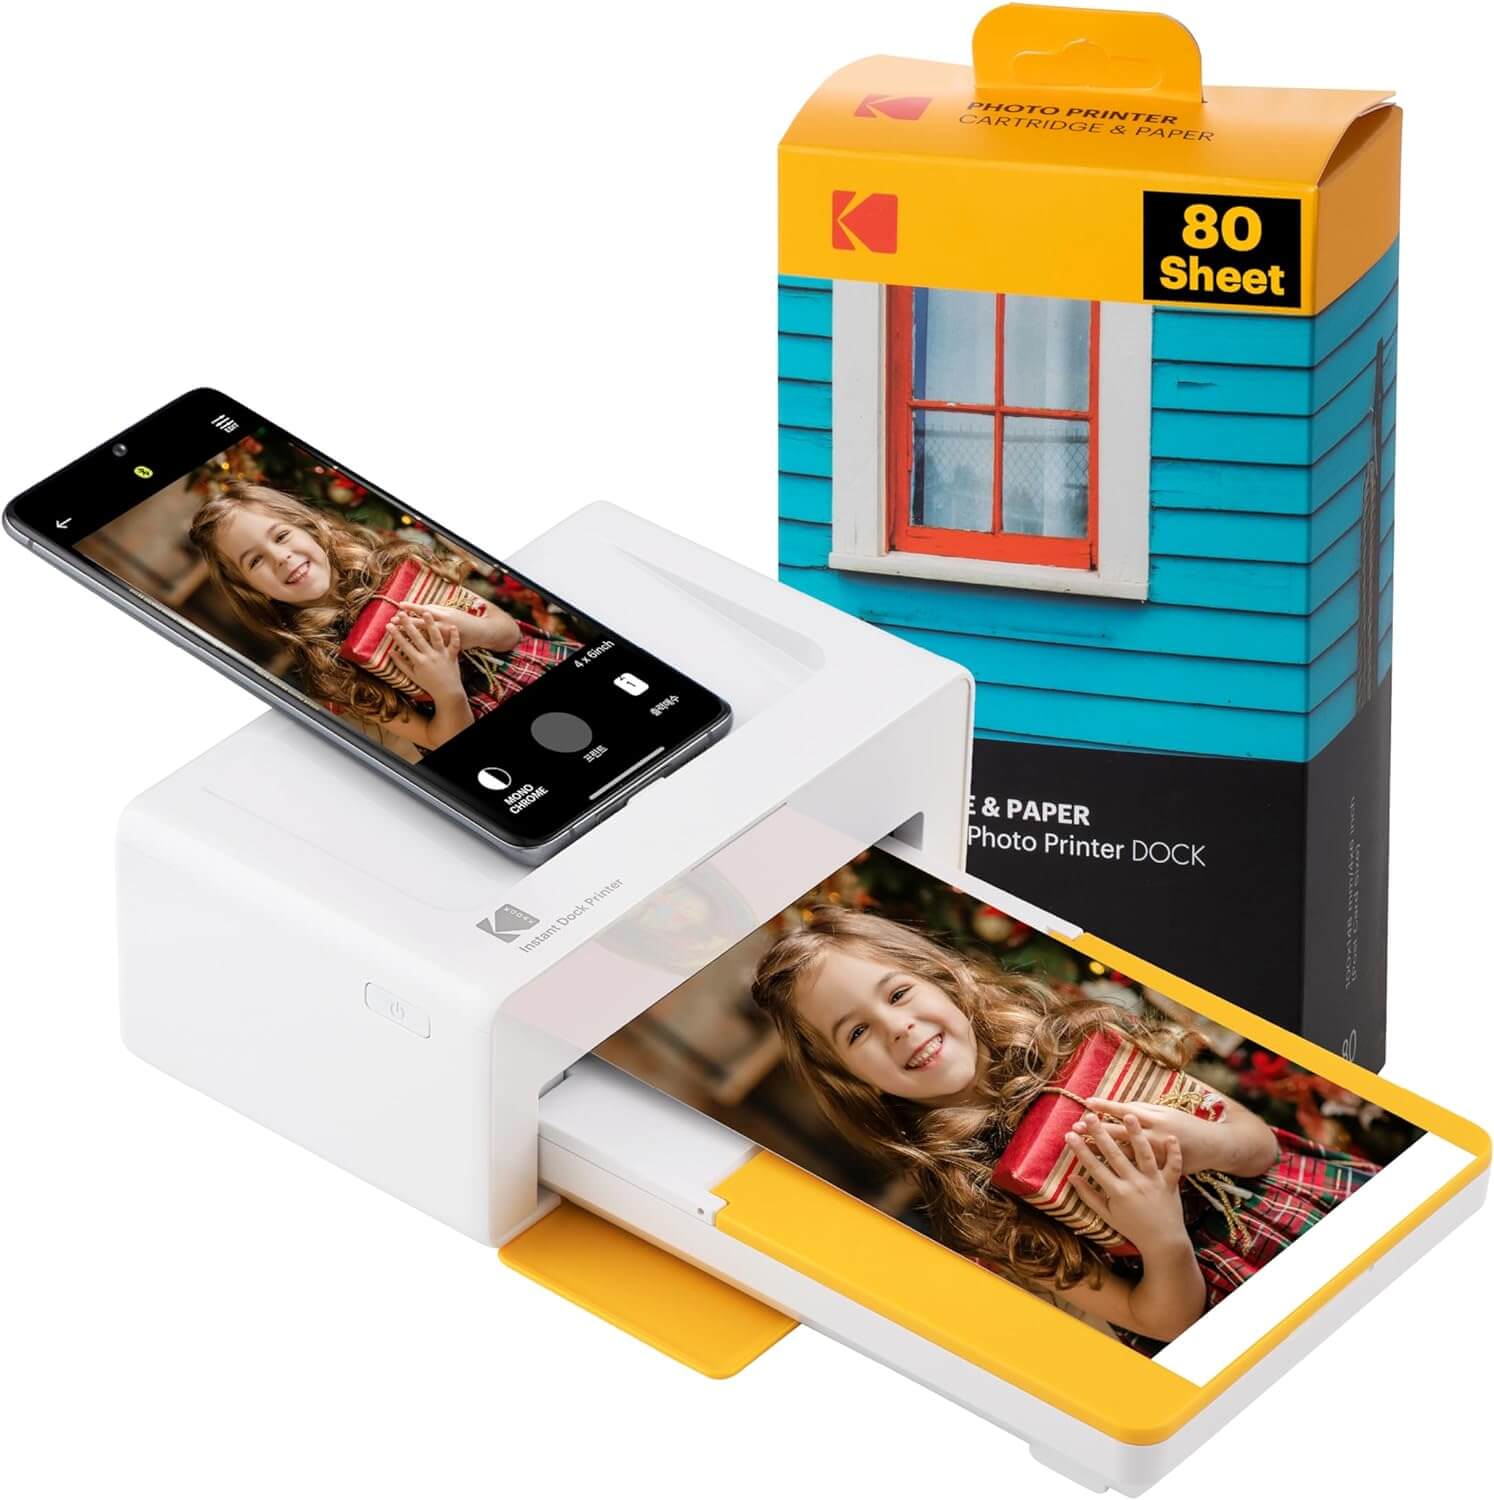 10. KODAK Dock Plus 4PASS Instant Photo Printer (4x6 inches)